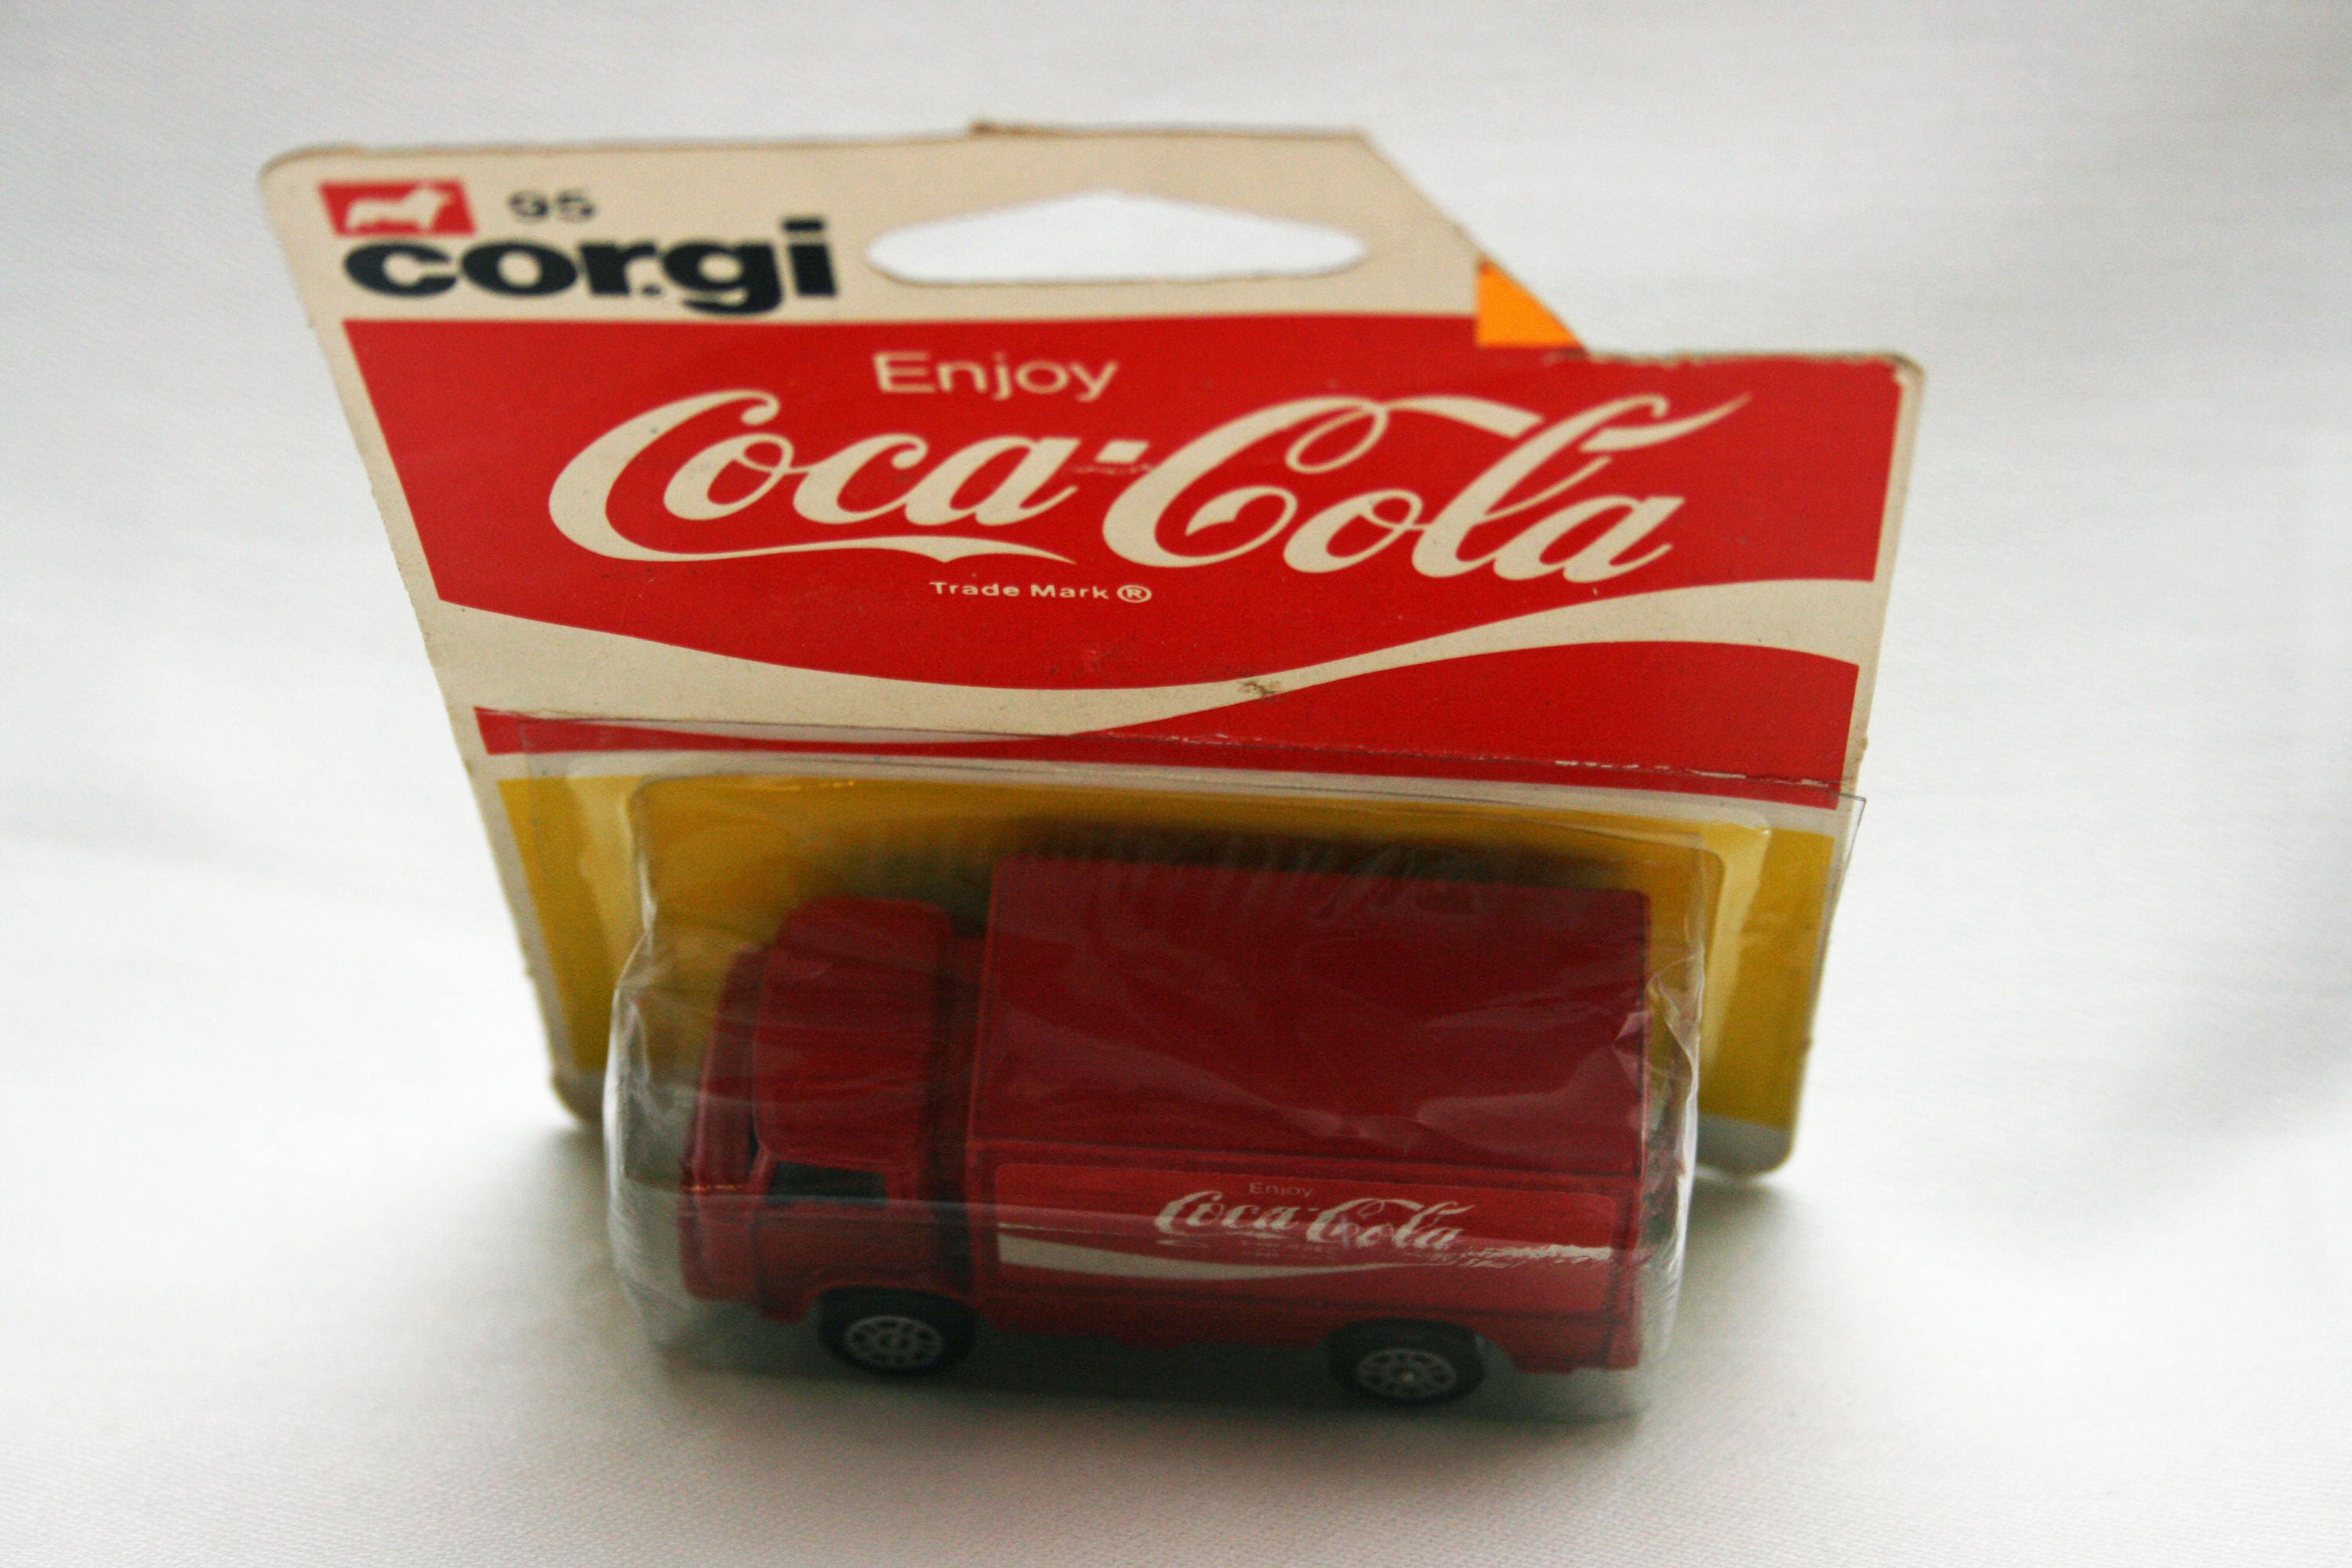 Corgi Juniors Leyland Terrier Coca Cola Truck Made In Great